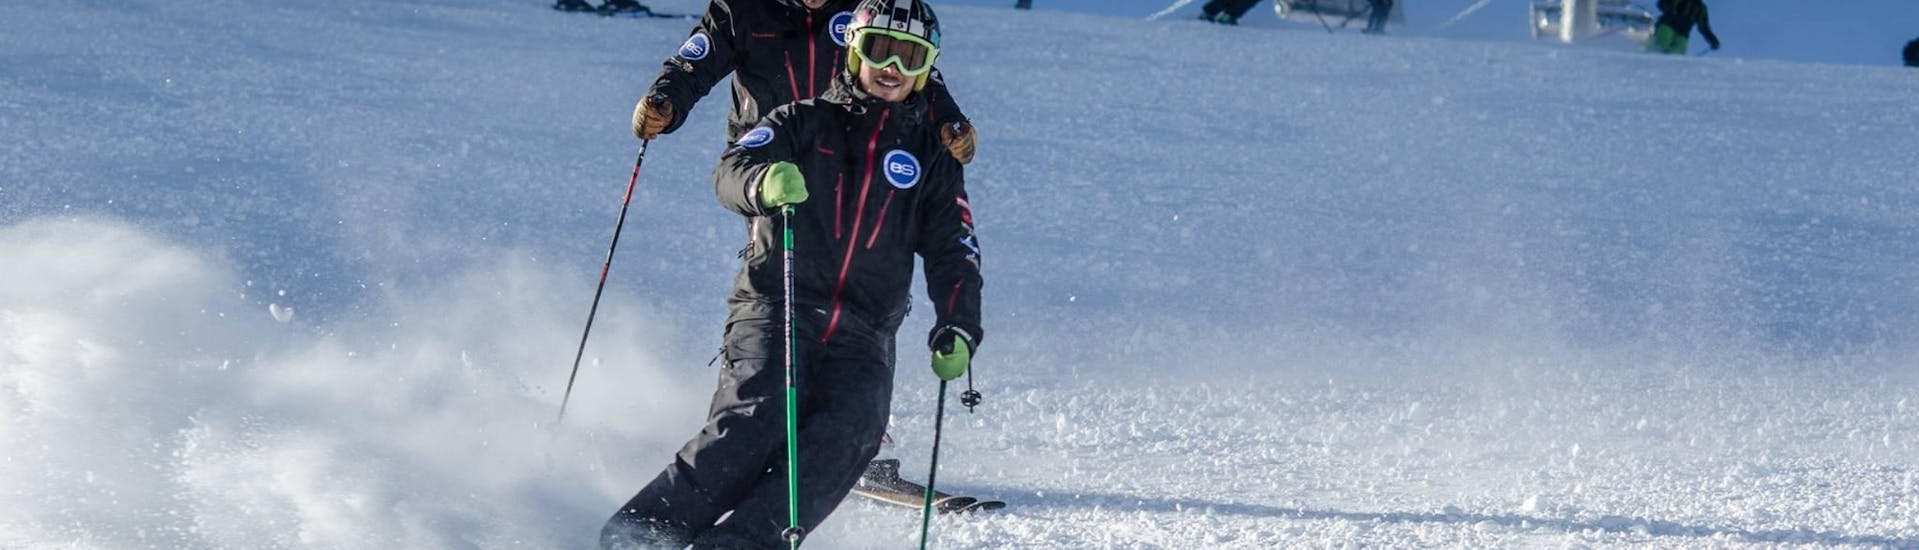 Skilessen voor tieners "Freeski" (11-17 jaar) voor gevorderde skiërs.